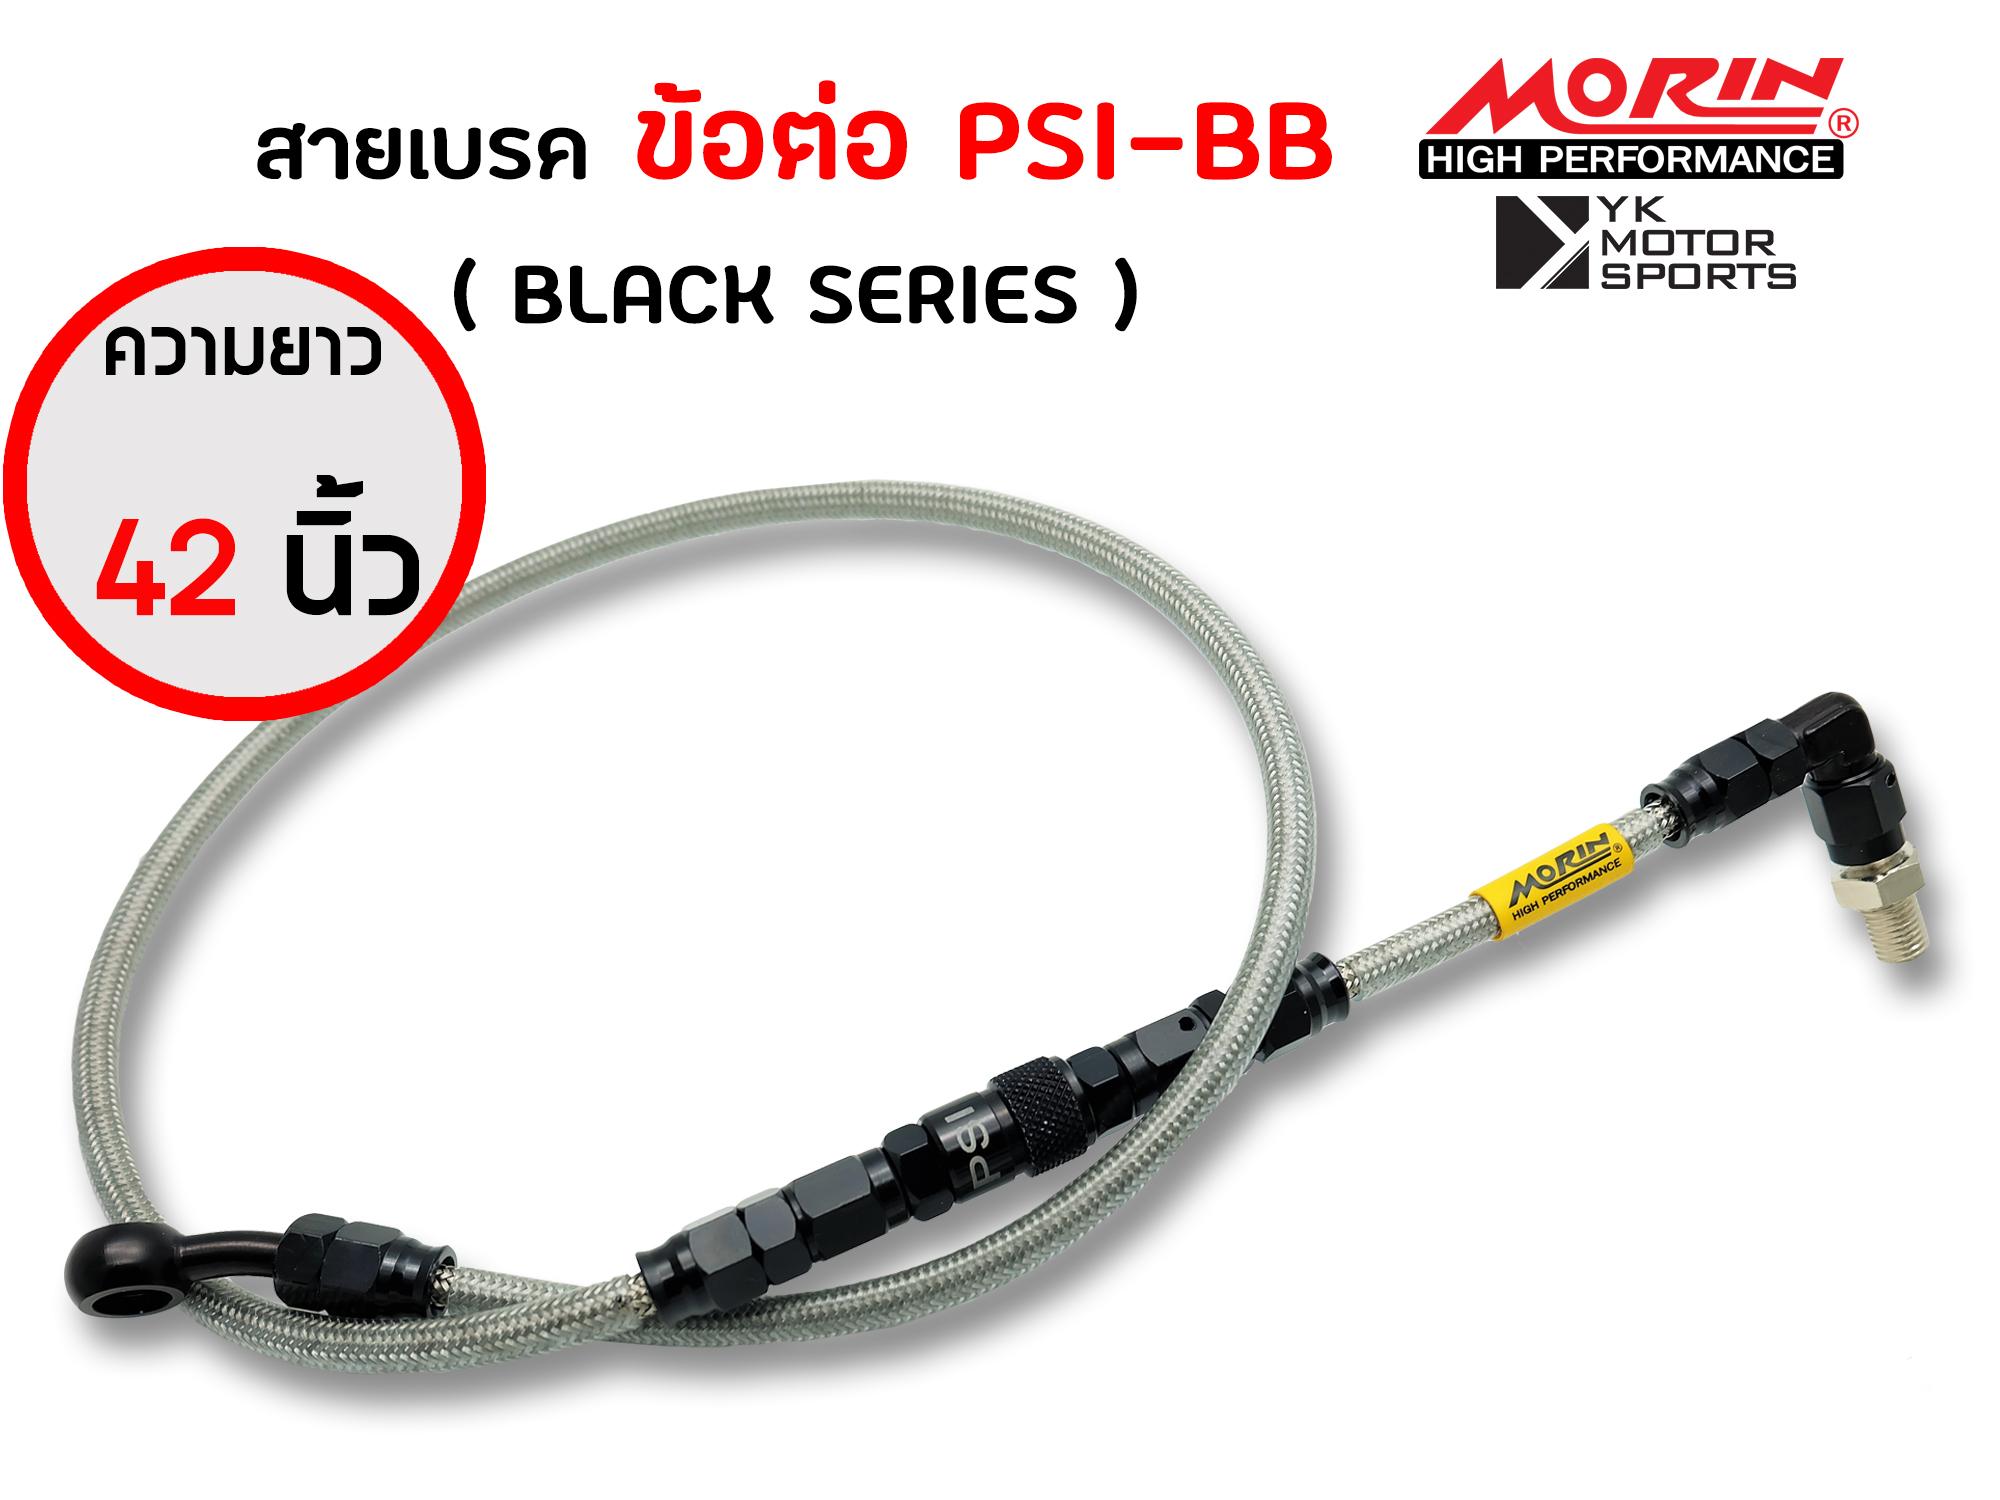 MORIN สายเบรค 42นิ้ว ข้อต่อPSI BB สีเทา Black series ของแต่งมอไซต์WAVE สำหรับรถมอไซต์ที่ใช้สายเบรค42นิ้ว ของแท้! ส่งฟรี PCX